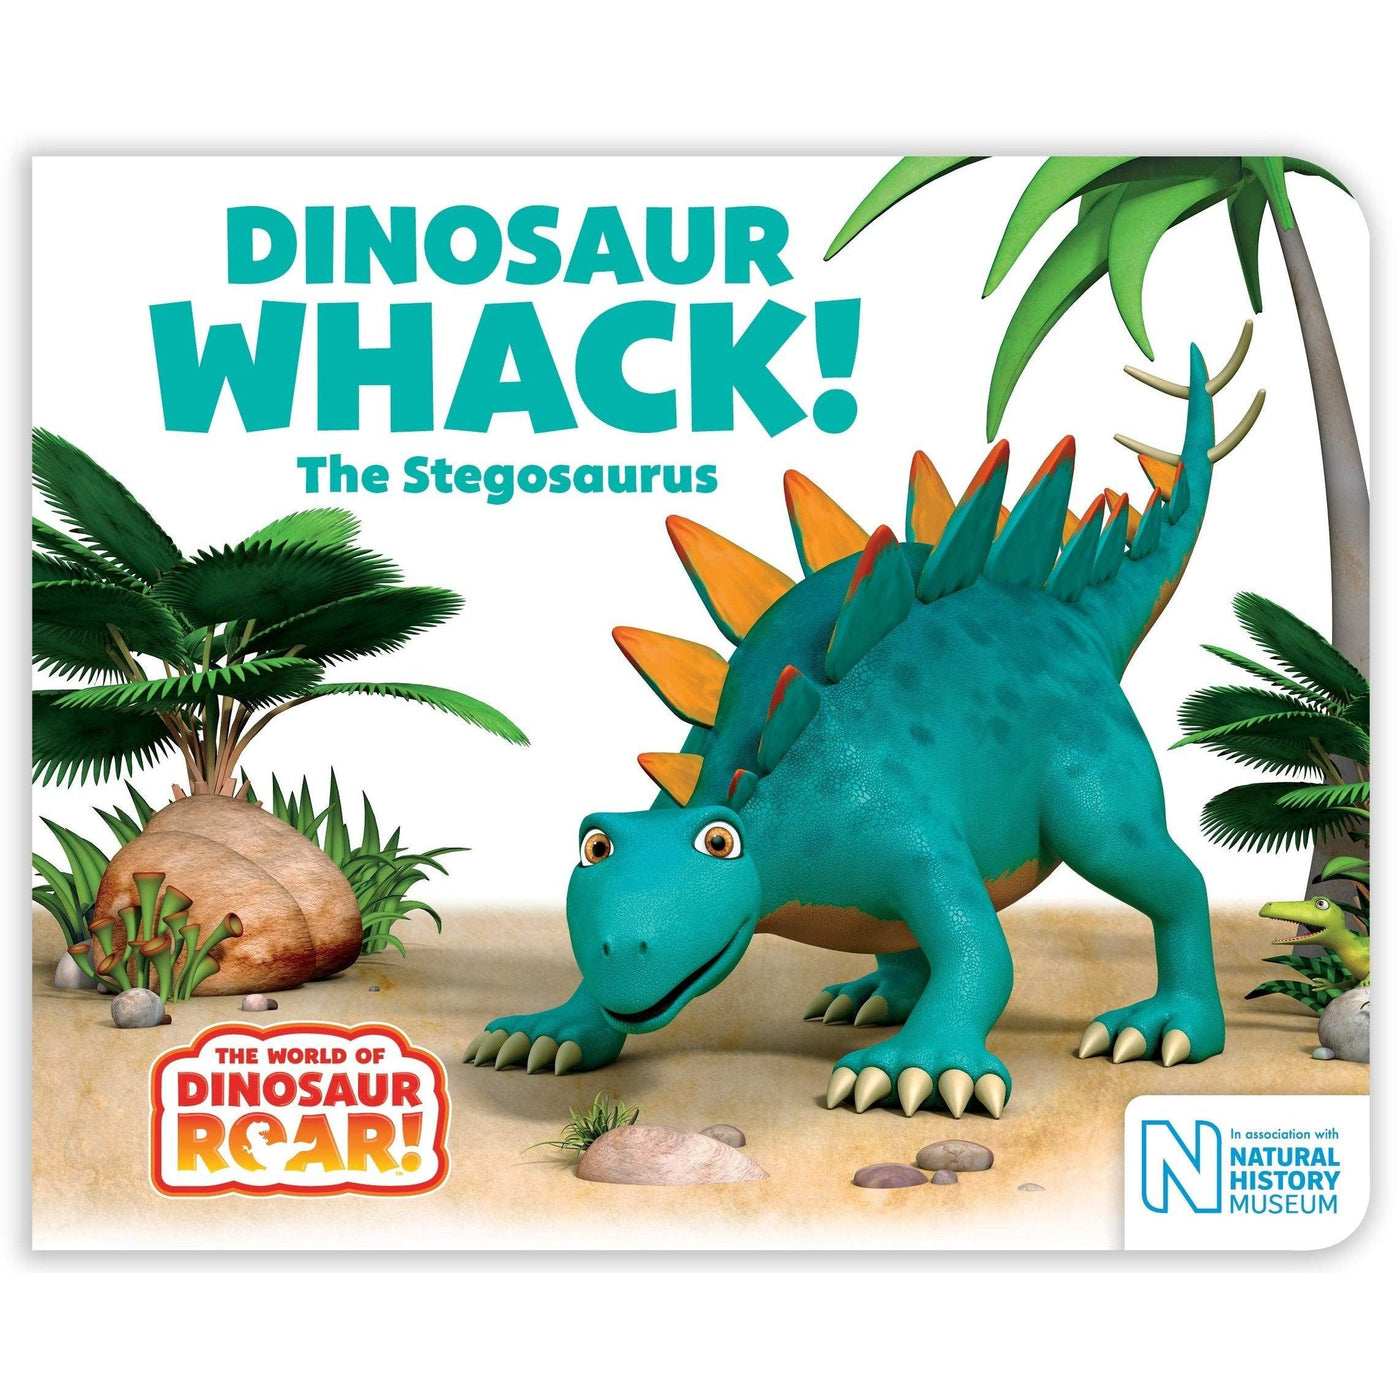 Dinosaur Whack! The Stegosaurus - Peter Curtis & Jeanne Willis